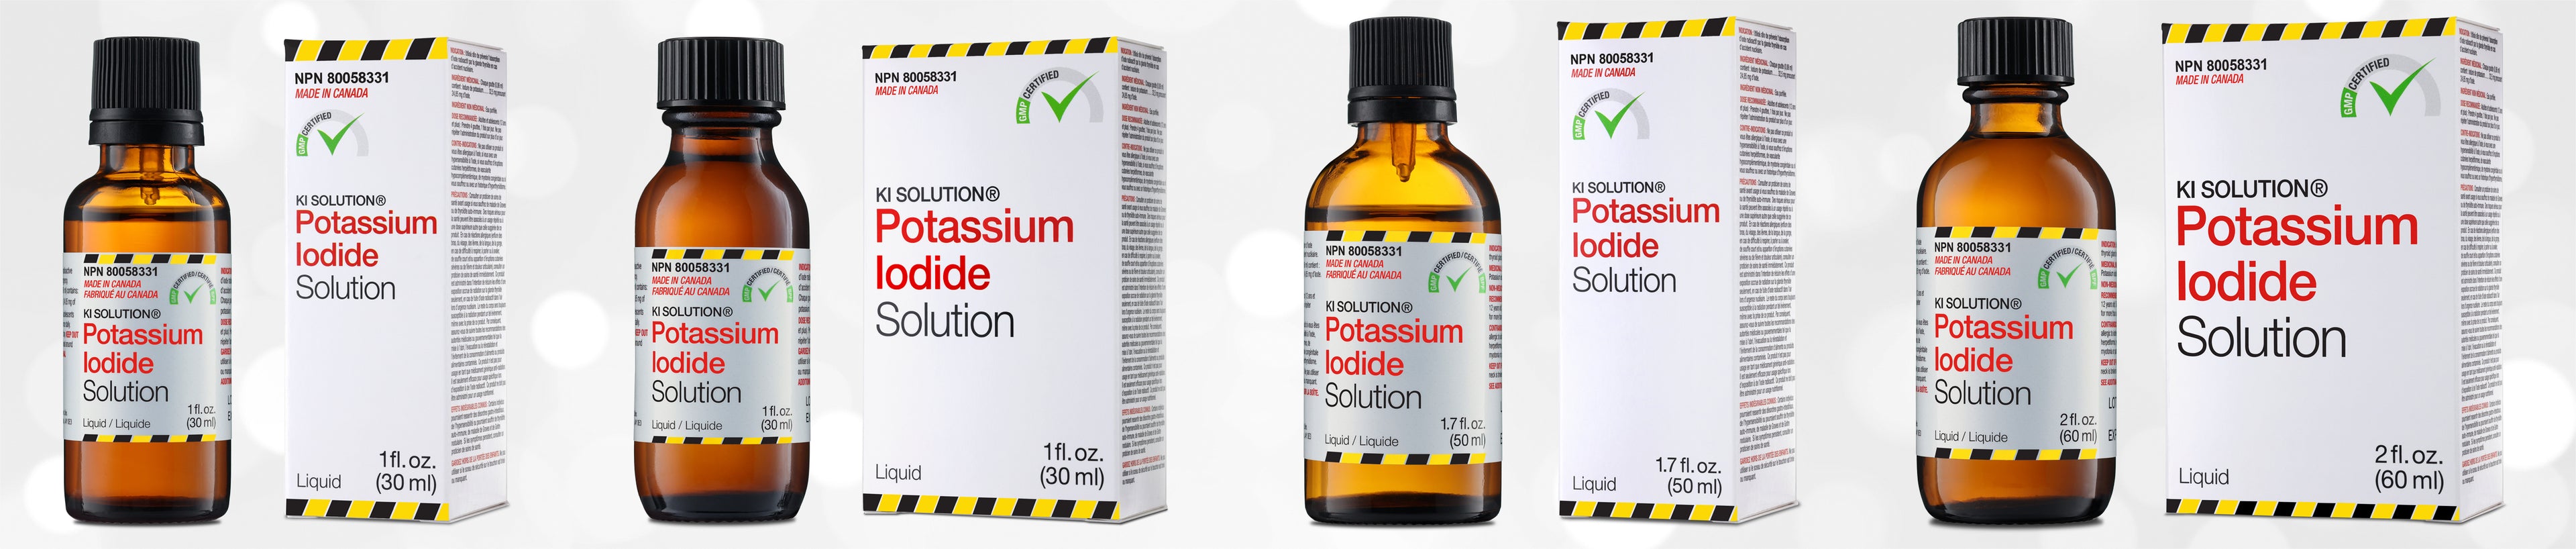 Art Pharma KI Solution Potassium Iodide Solution